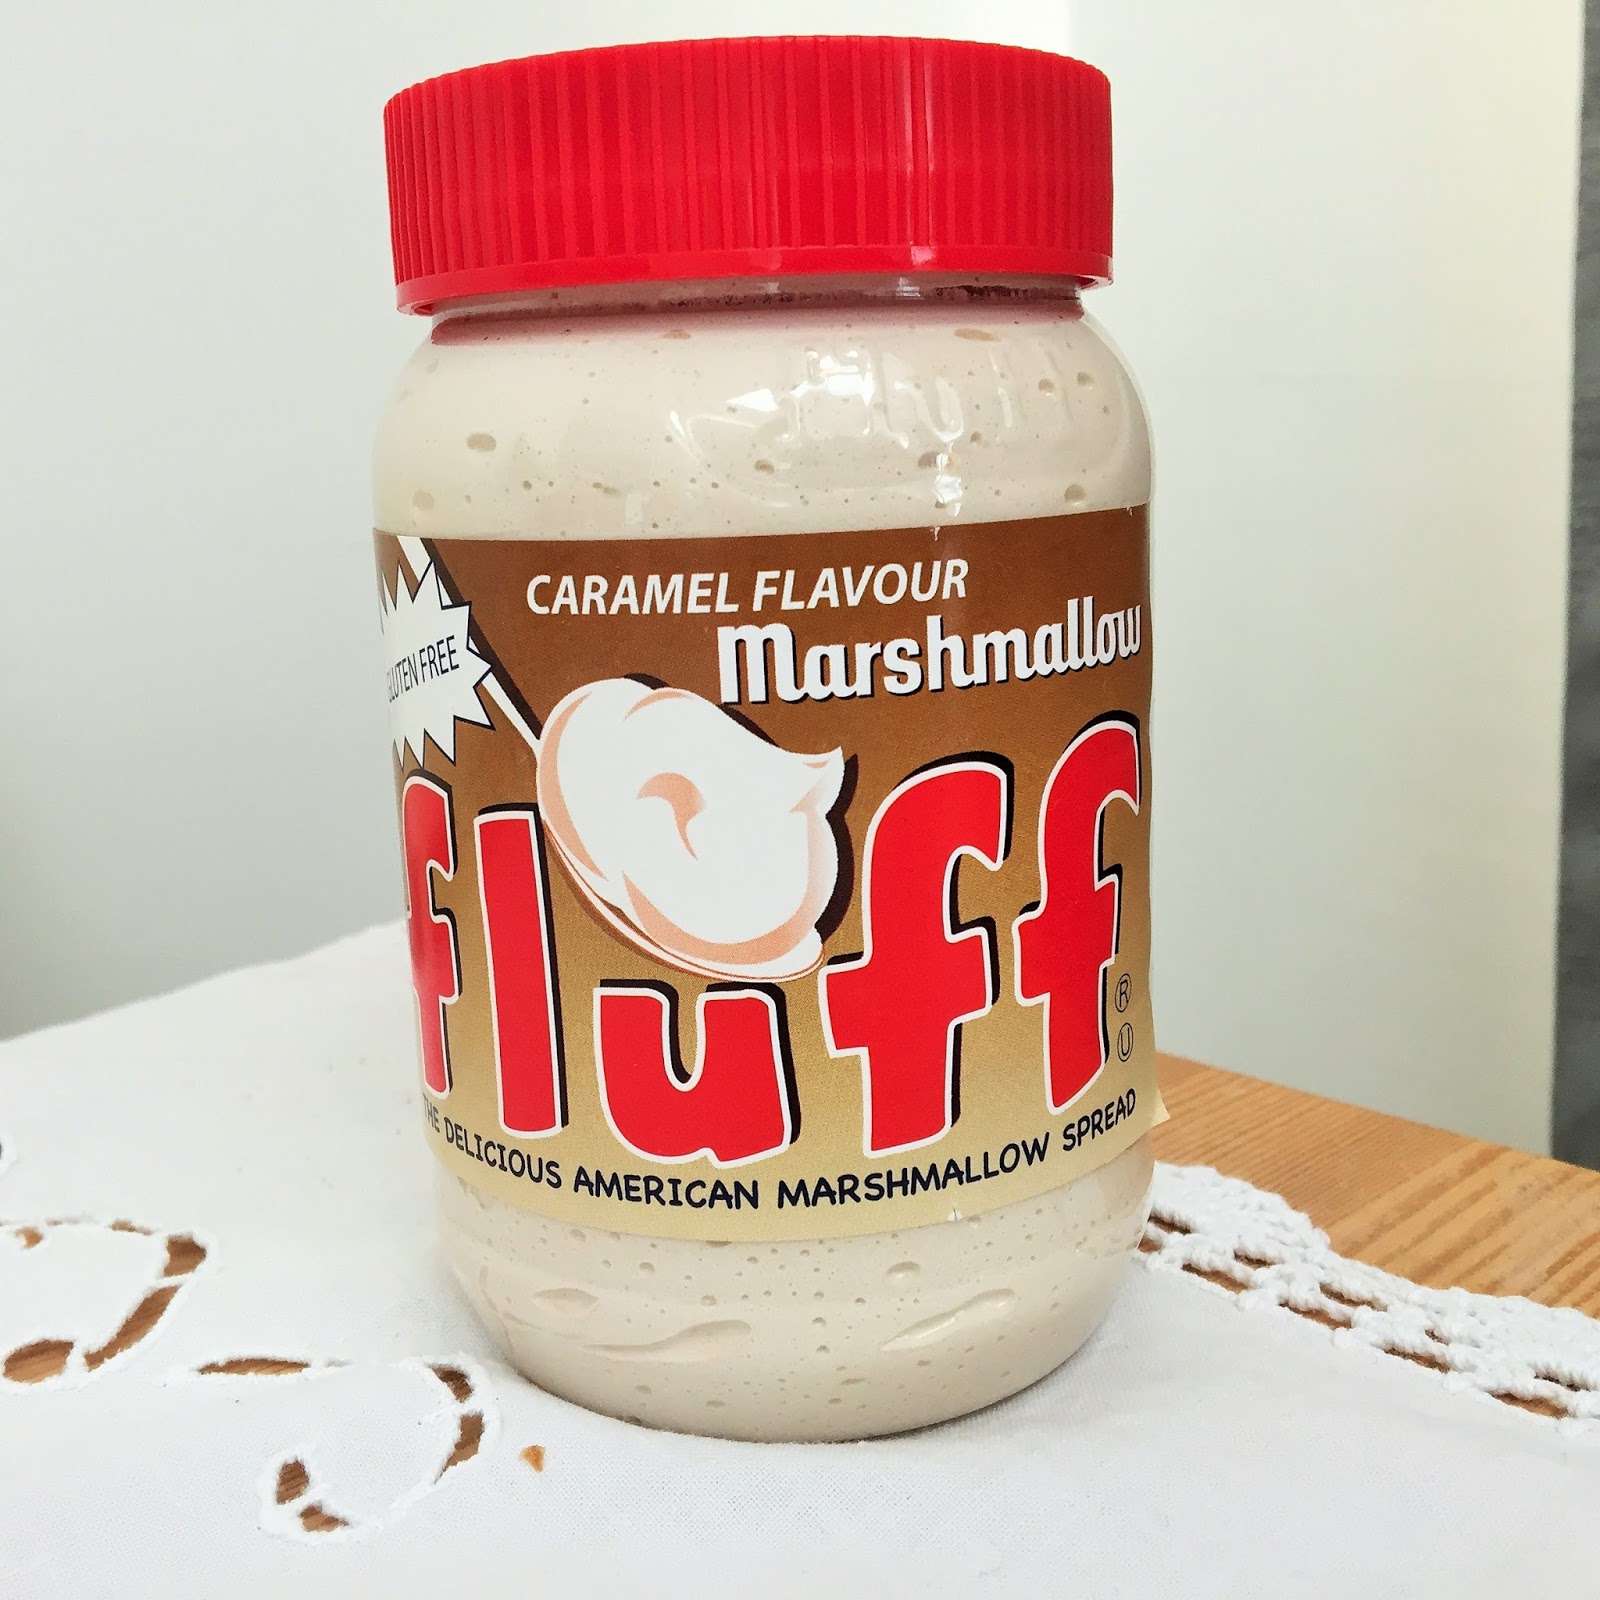 Caramel Flavour Marshmallow Fluff (B&M Bargains) .